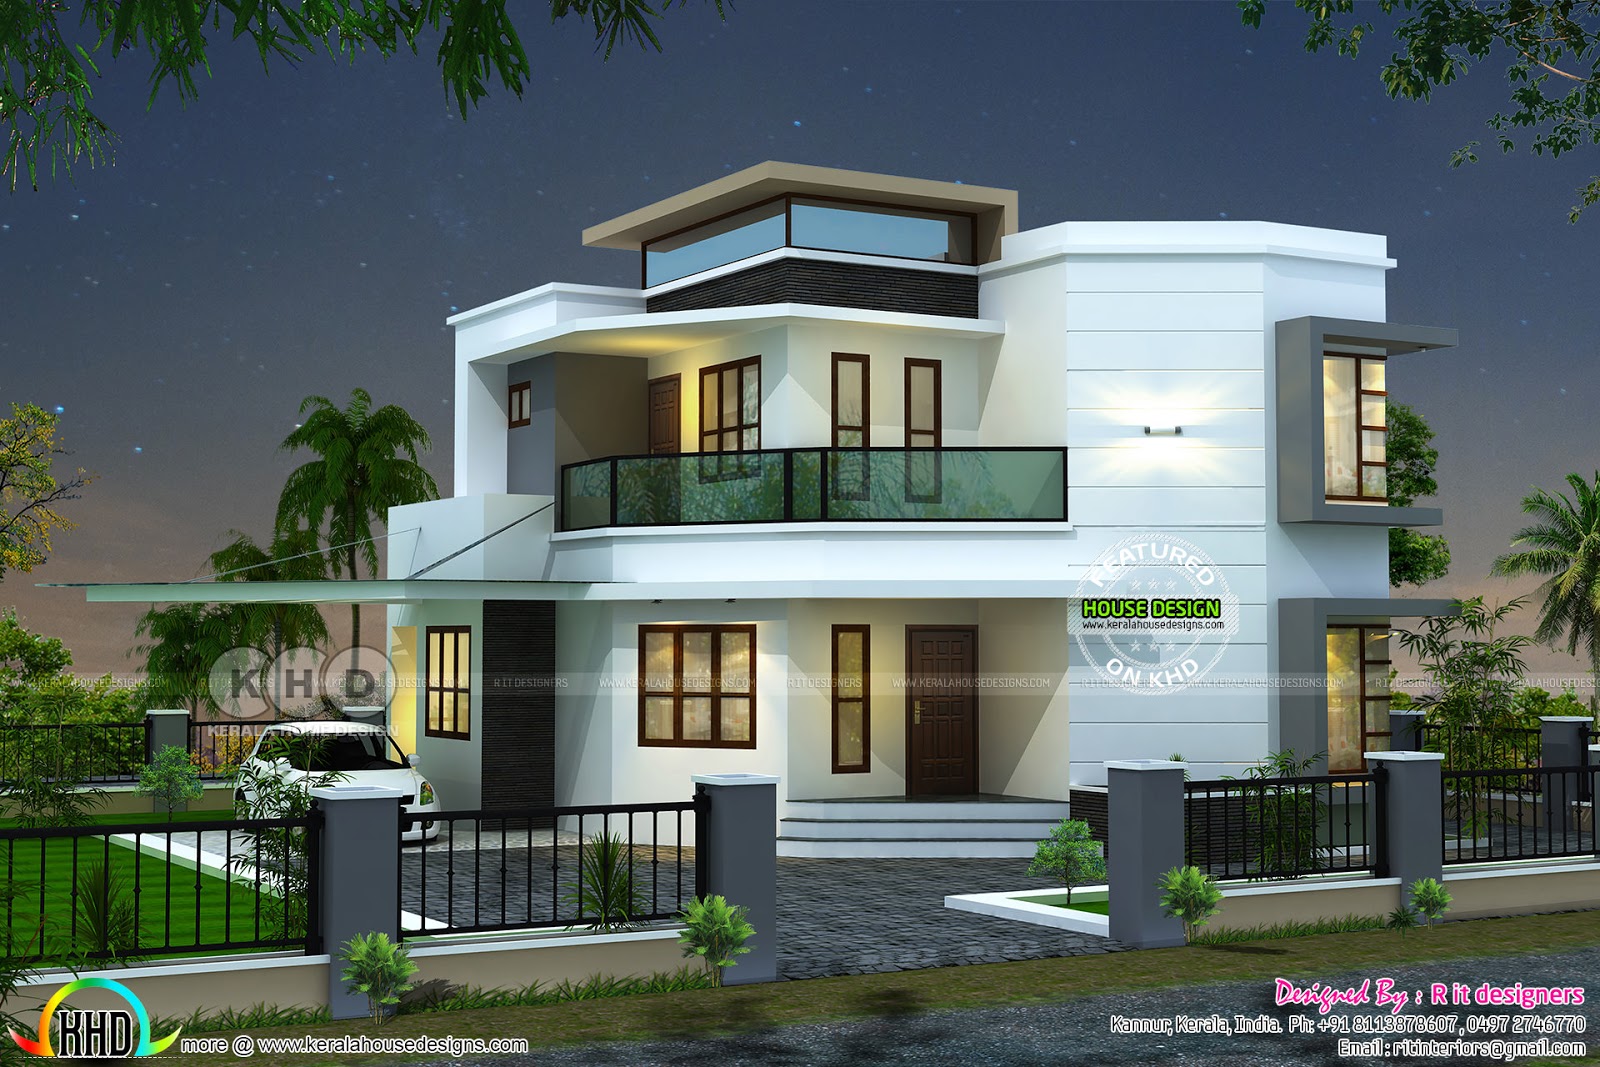  3  bedroom  modern  house  plan  Kerala home  design and floor 